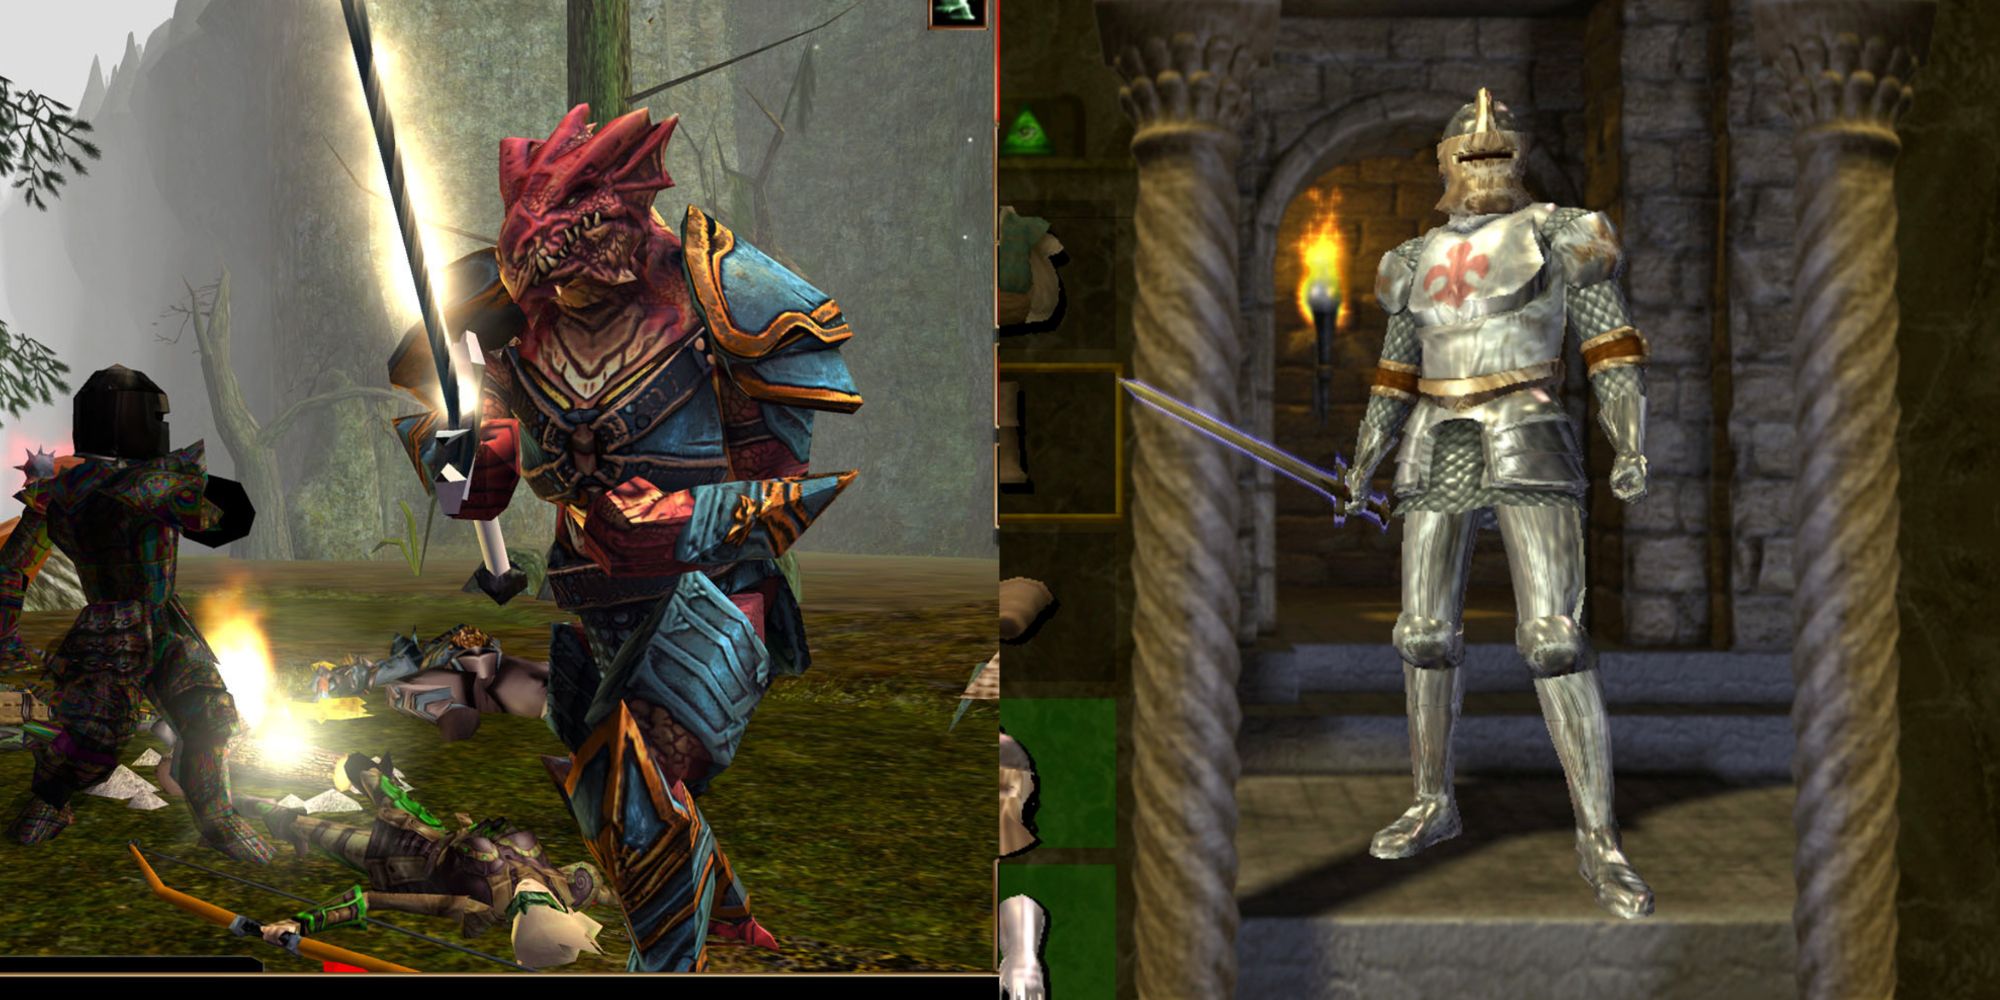 Split images of Baldur's Gate and Neverwinter